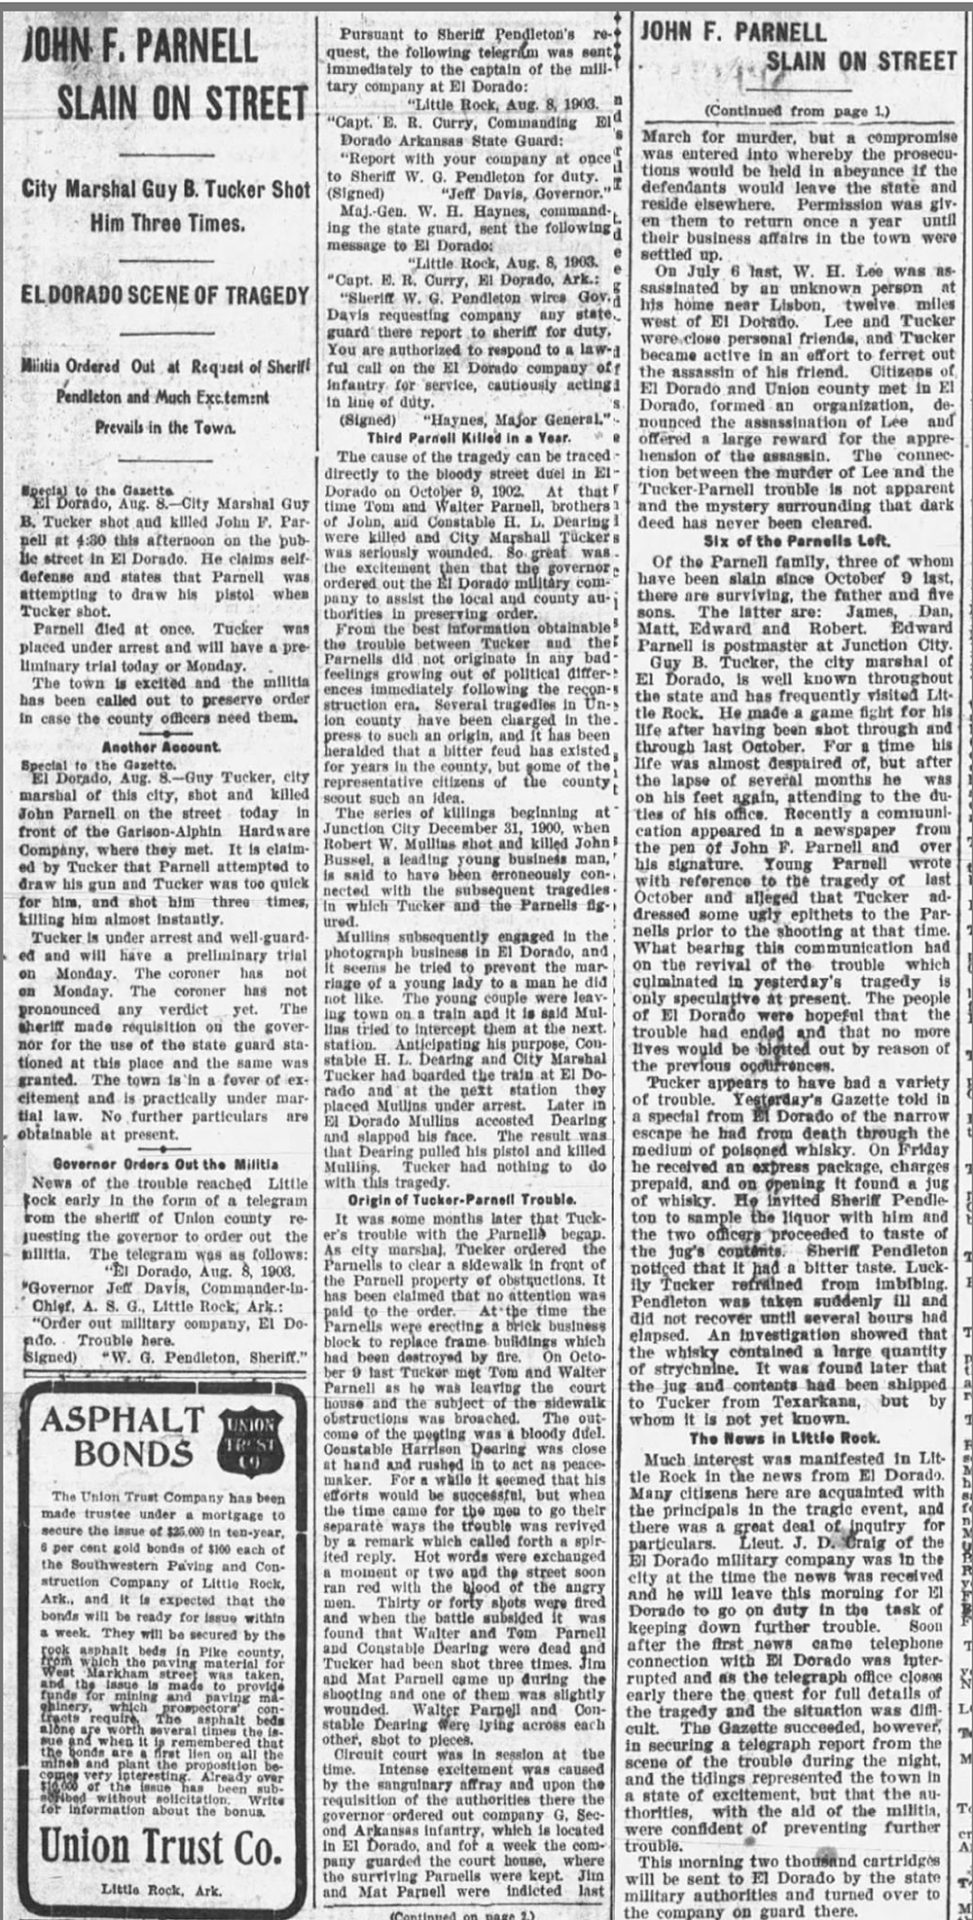 "John F. Parnell Slain on Street" newspaper clipping